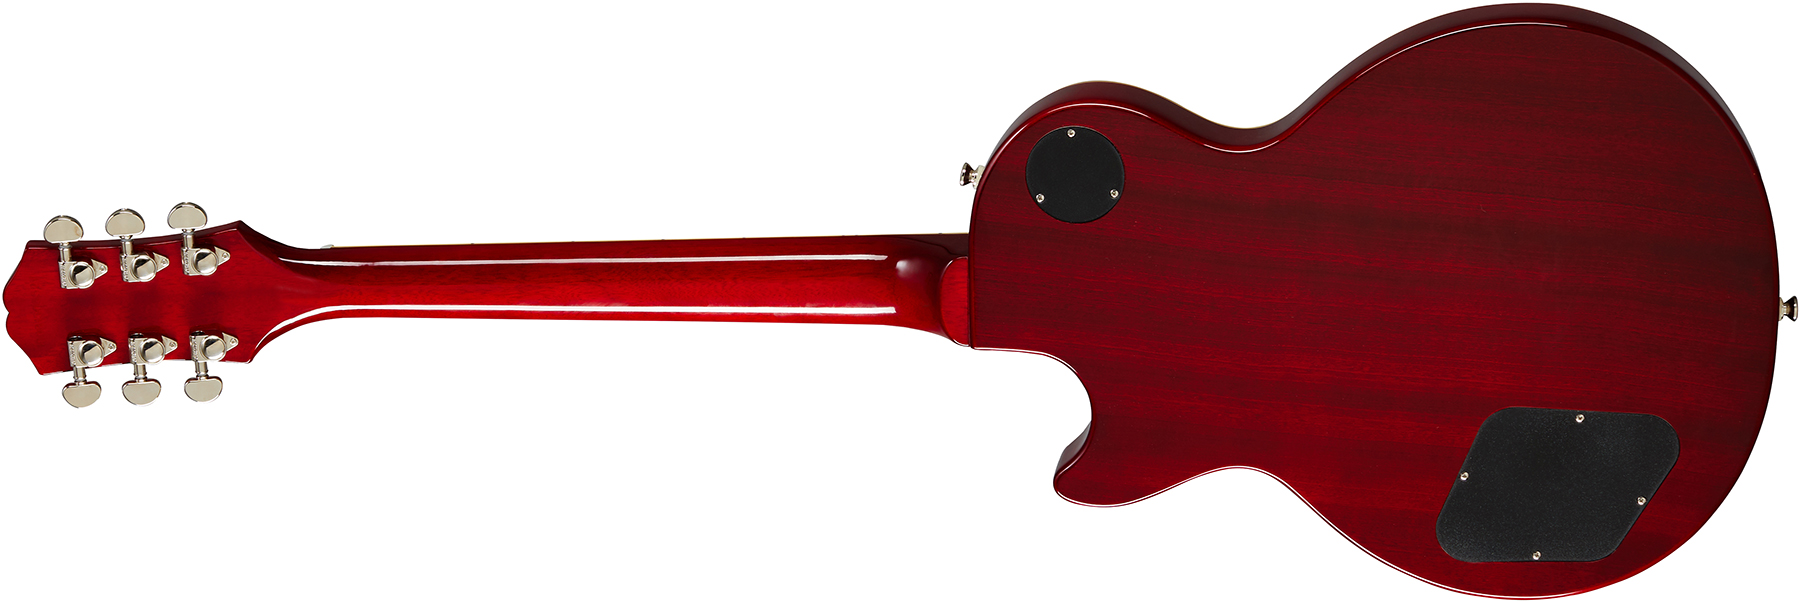 Epiphone Les Paul Standard 60s 2h Ht Rw - Iced Tea - Guitarra eléctrica de corte único. - Variation 1